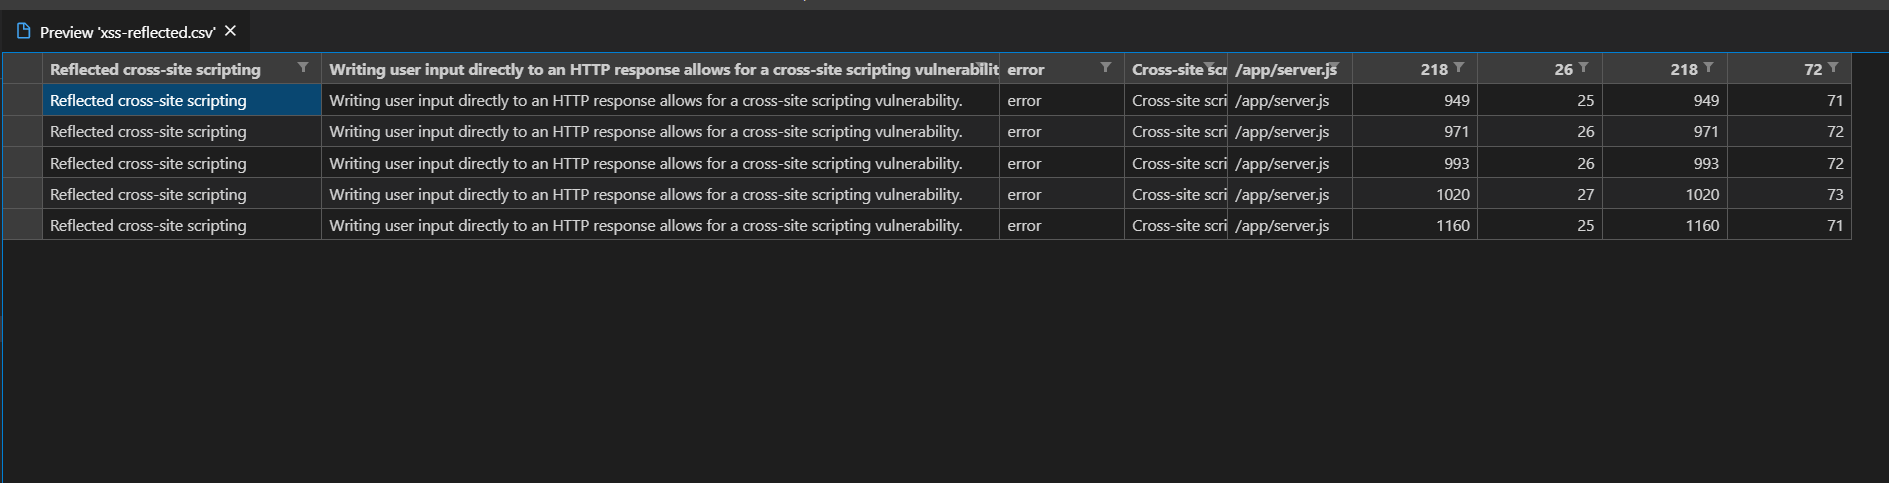 CodeQL CSV screenshot with XSS vulnerabilities